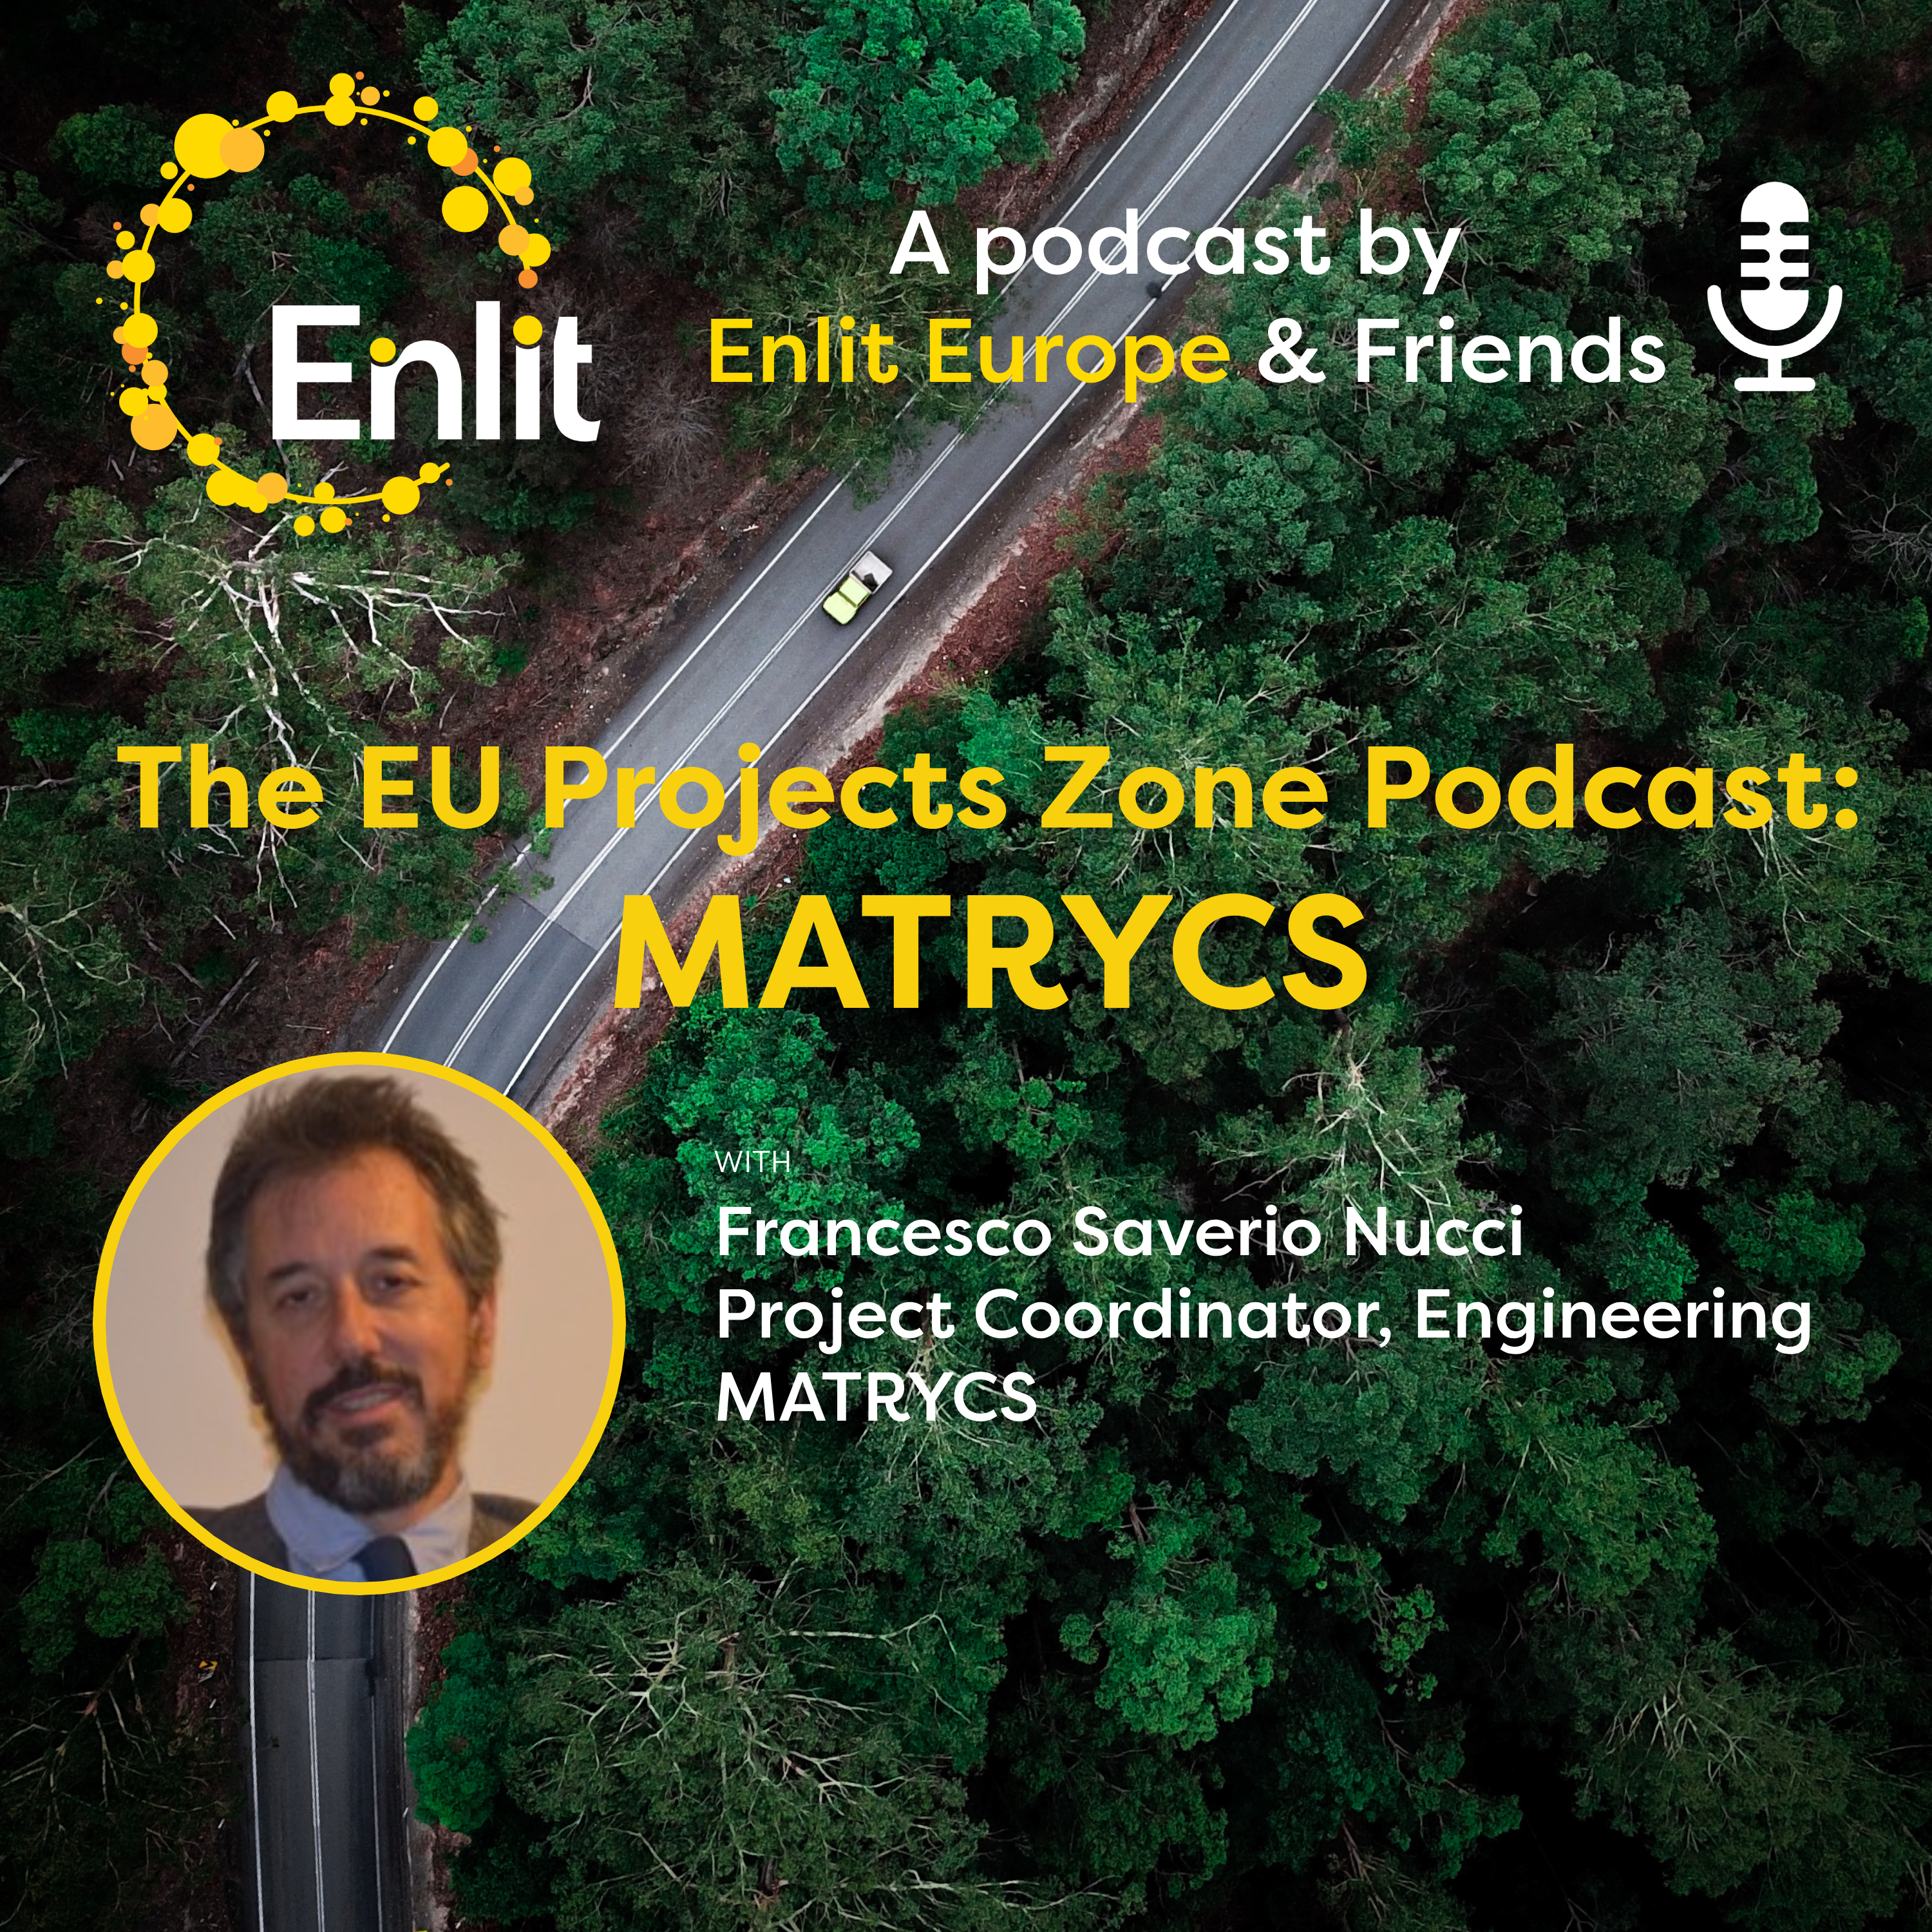 The EU Projects Zone Podcast: MATRYCS with Francesco Saverio Nucci